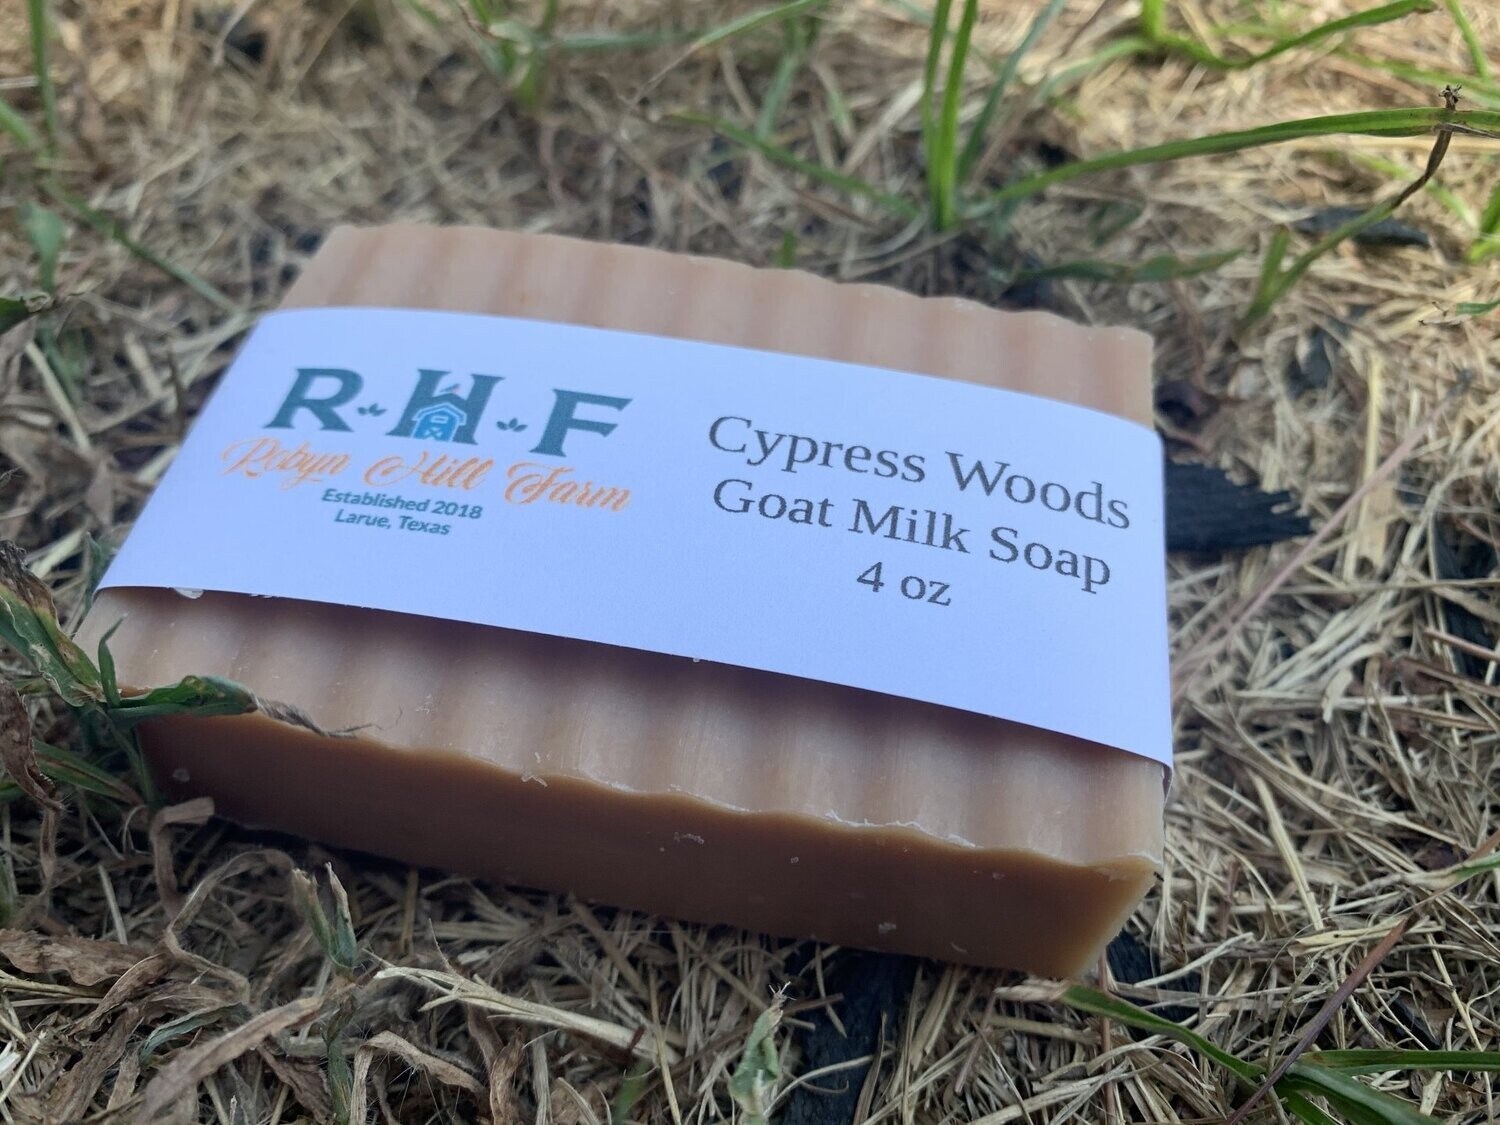 Cypress Woods Goat Milk Soap Bar